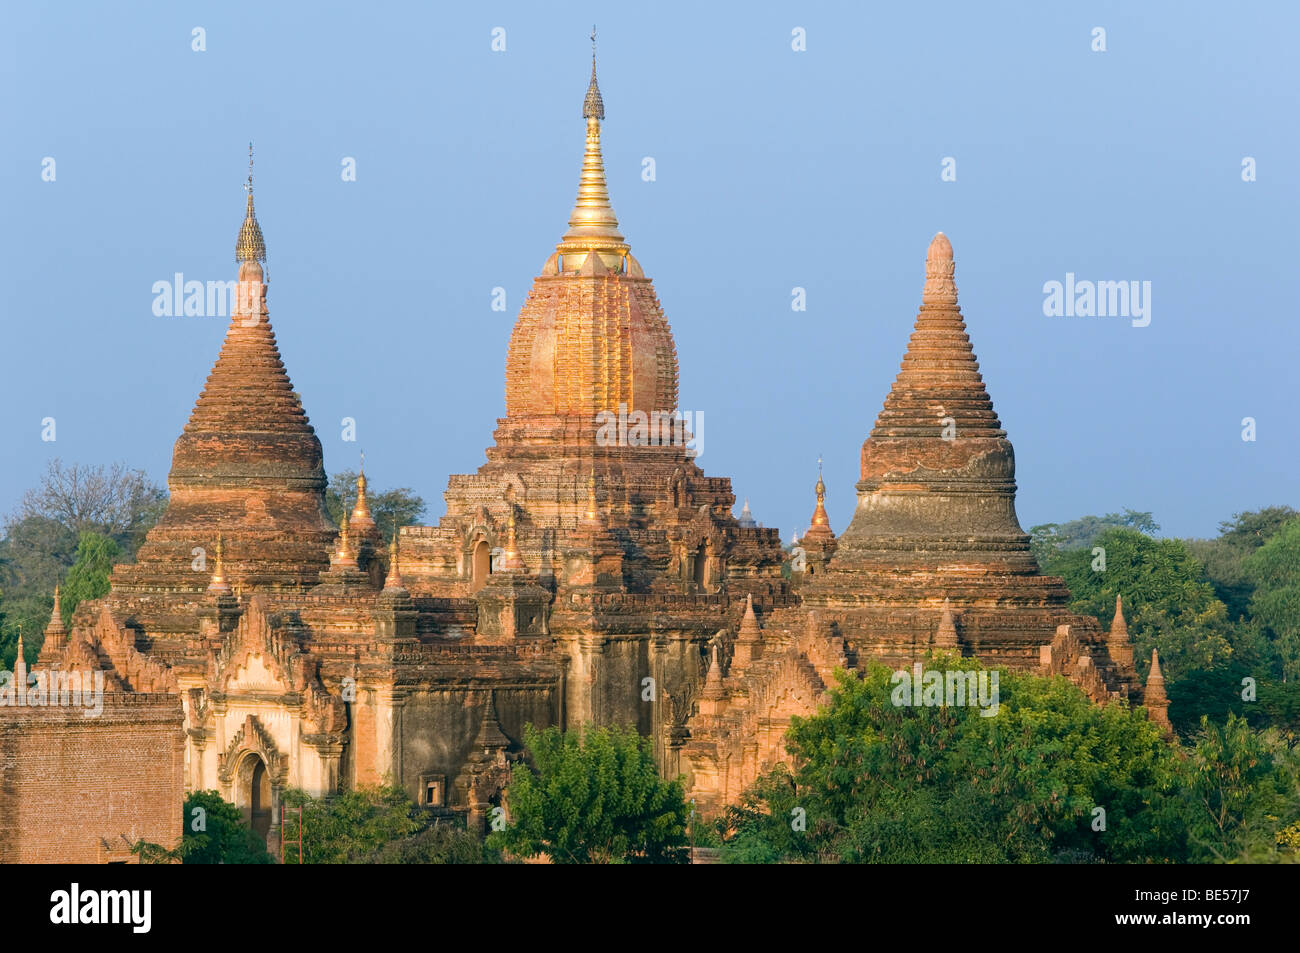 Pagoda, temple, Old Bagan, Pagan, Burma, Myanmar, Asia Stock Photo